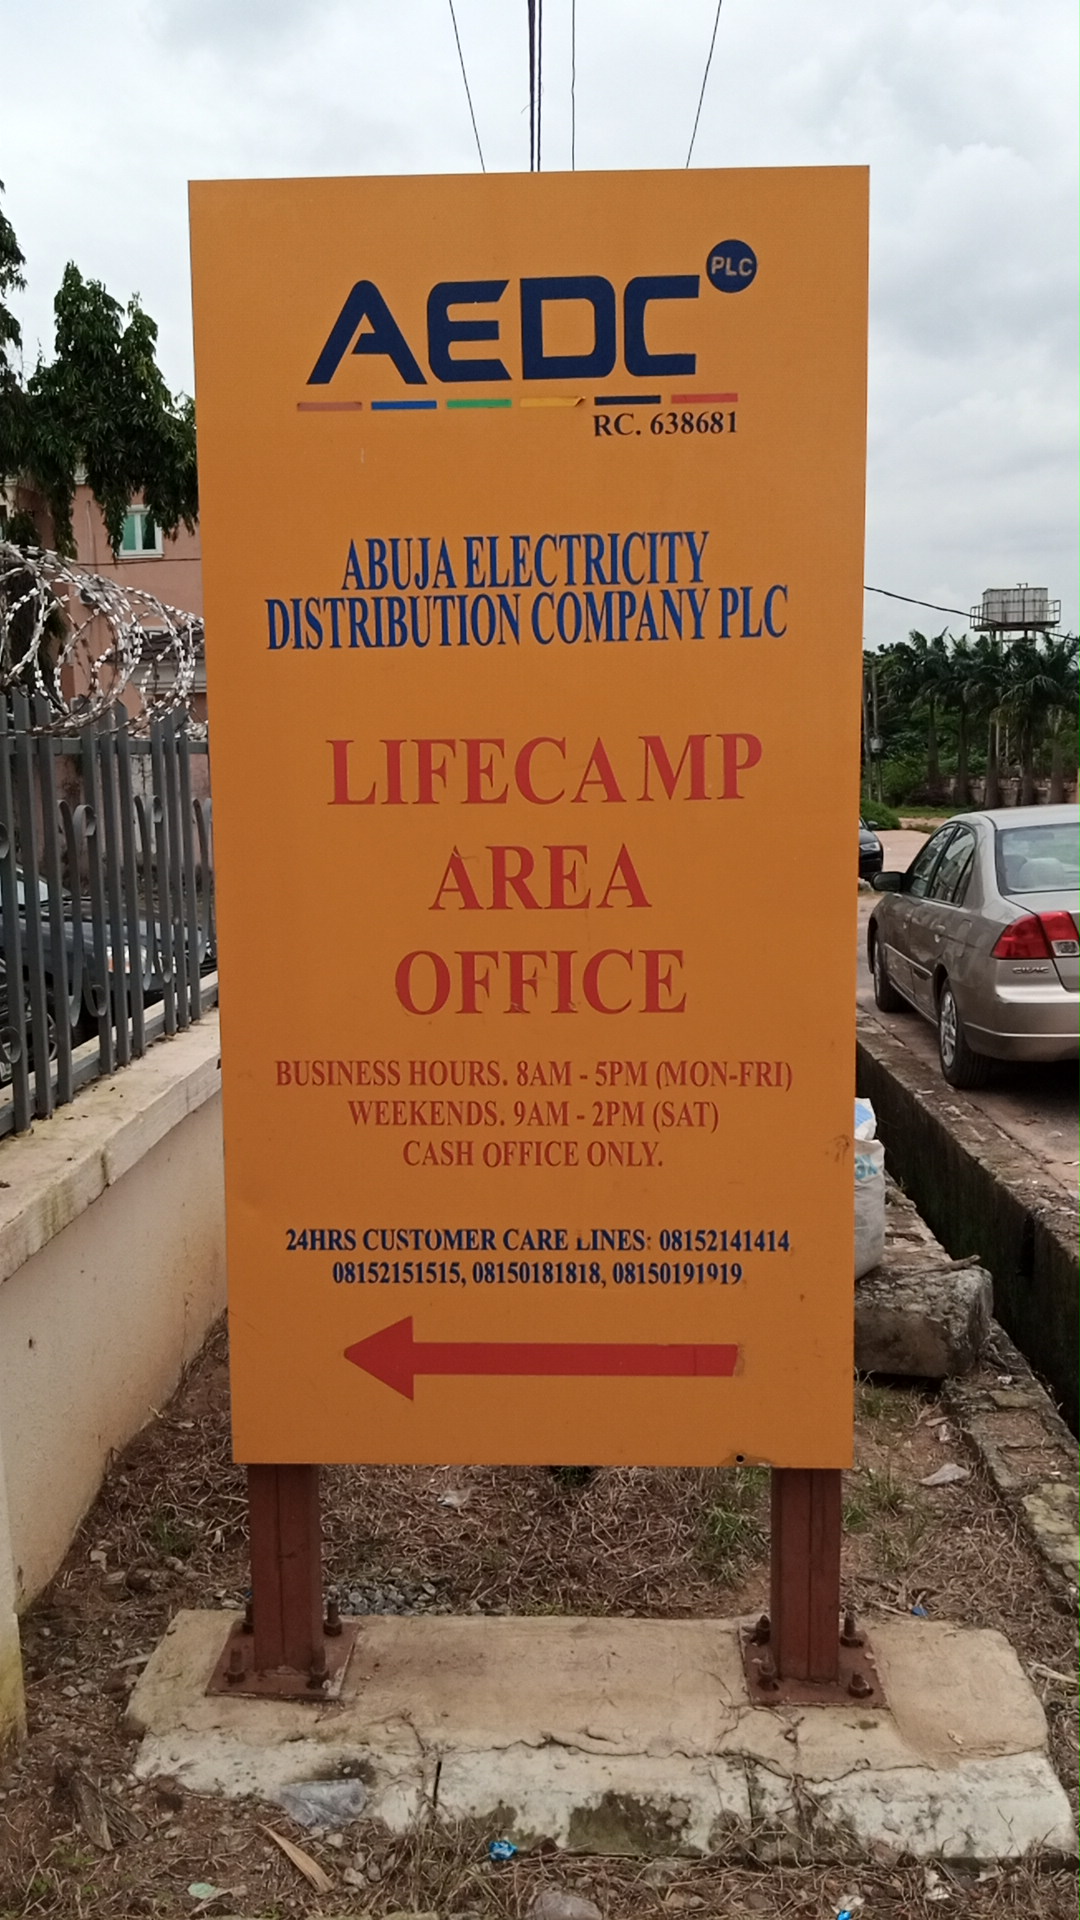 Abuja Electricity Distribution Company - Life Camp area office